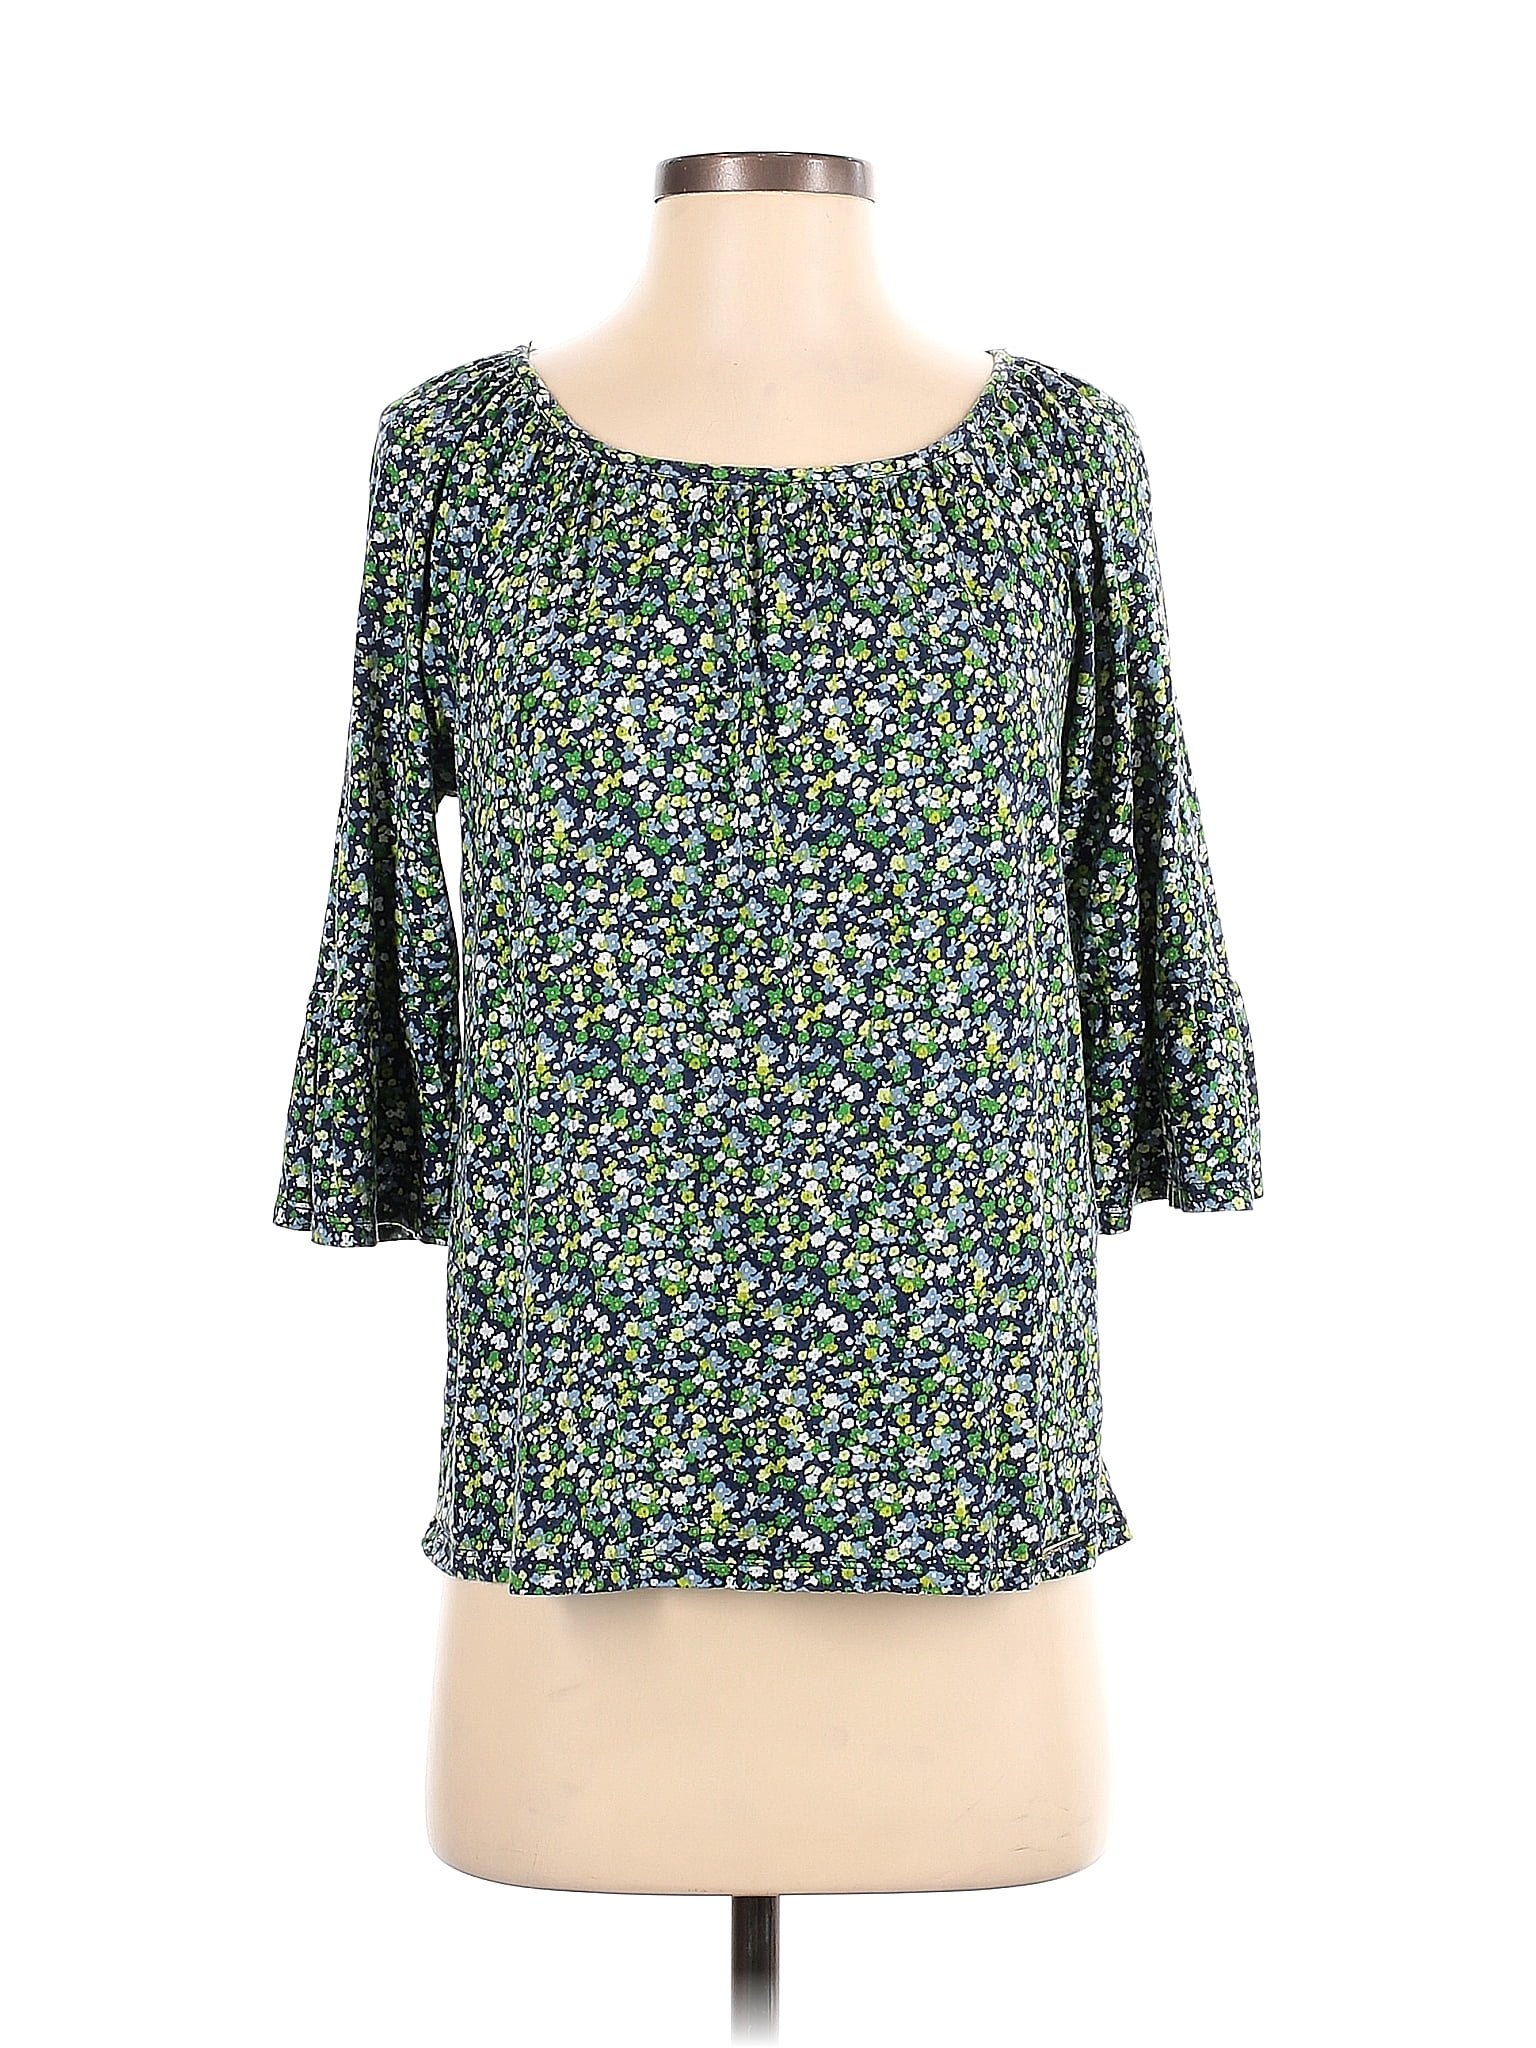 Michael Kors Women's Floral 3/4 Sleeve Jewel Neck Top Green Size 2X